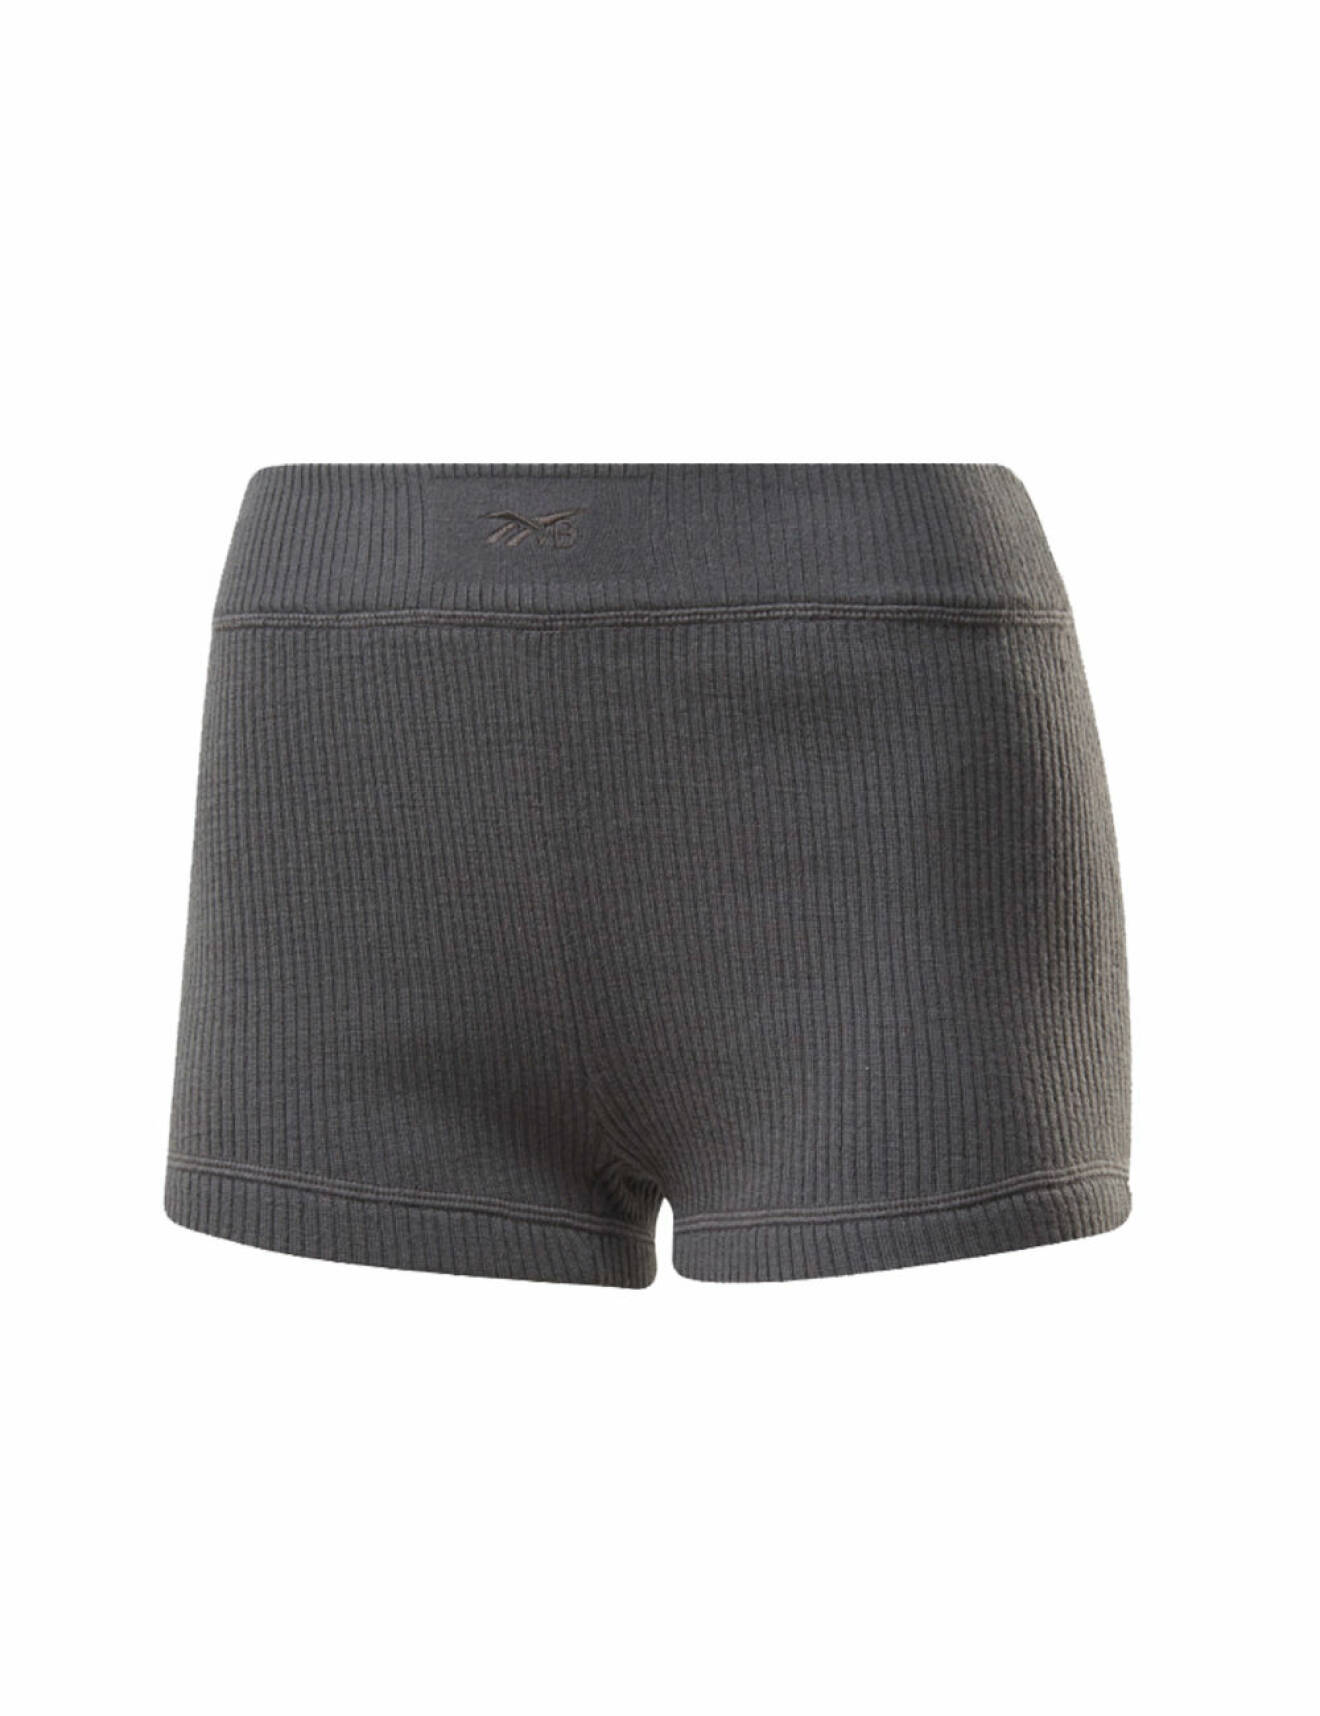 Reebok x Victoria Beckham 2020: grå ribbade shorts